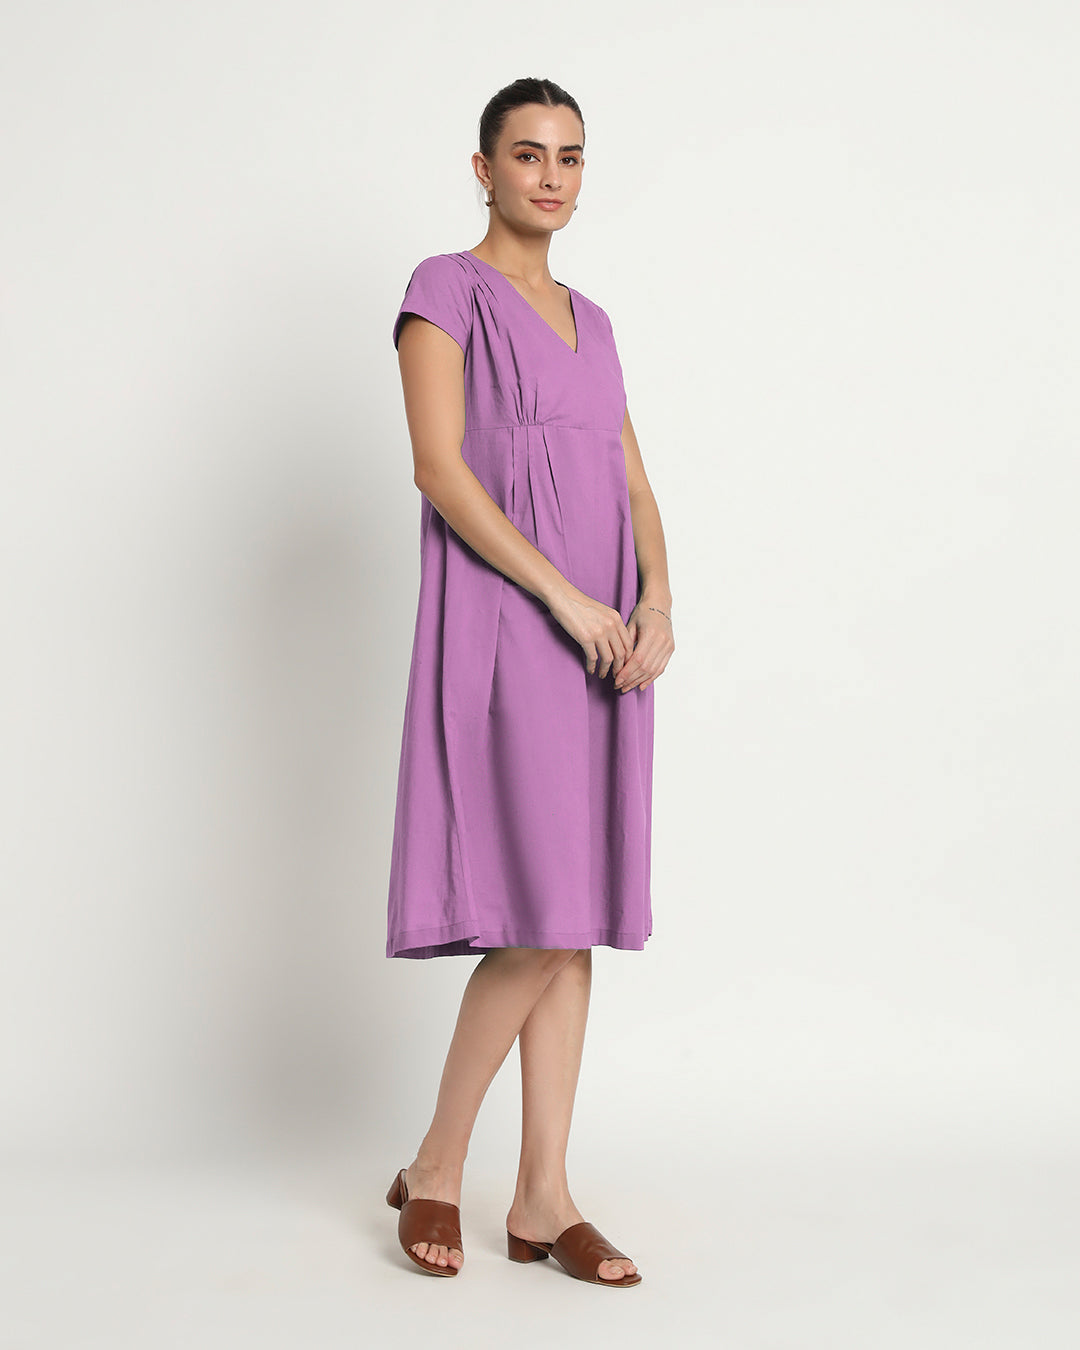 Wisteria Purple Voguish Verve V Neck Dress